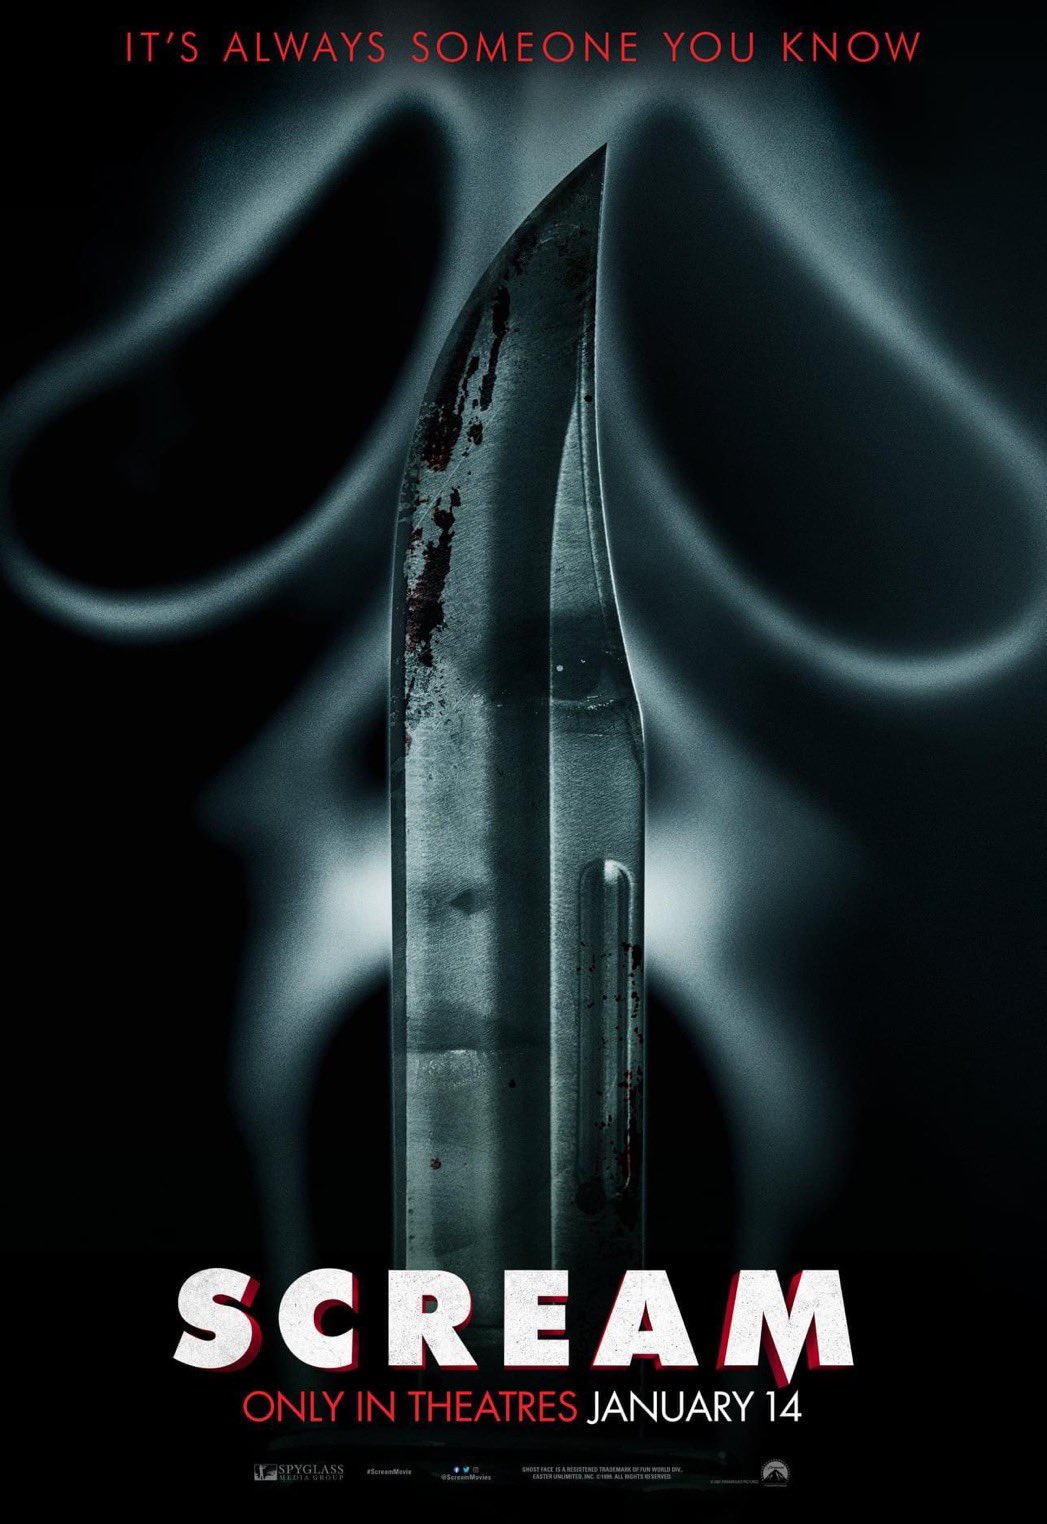 New Scream (2022) Poster Arrives For Halloween